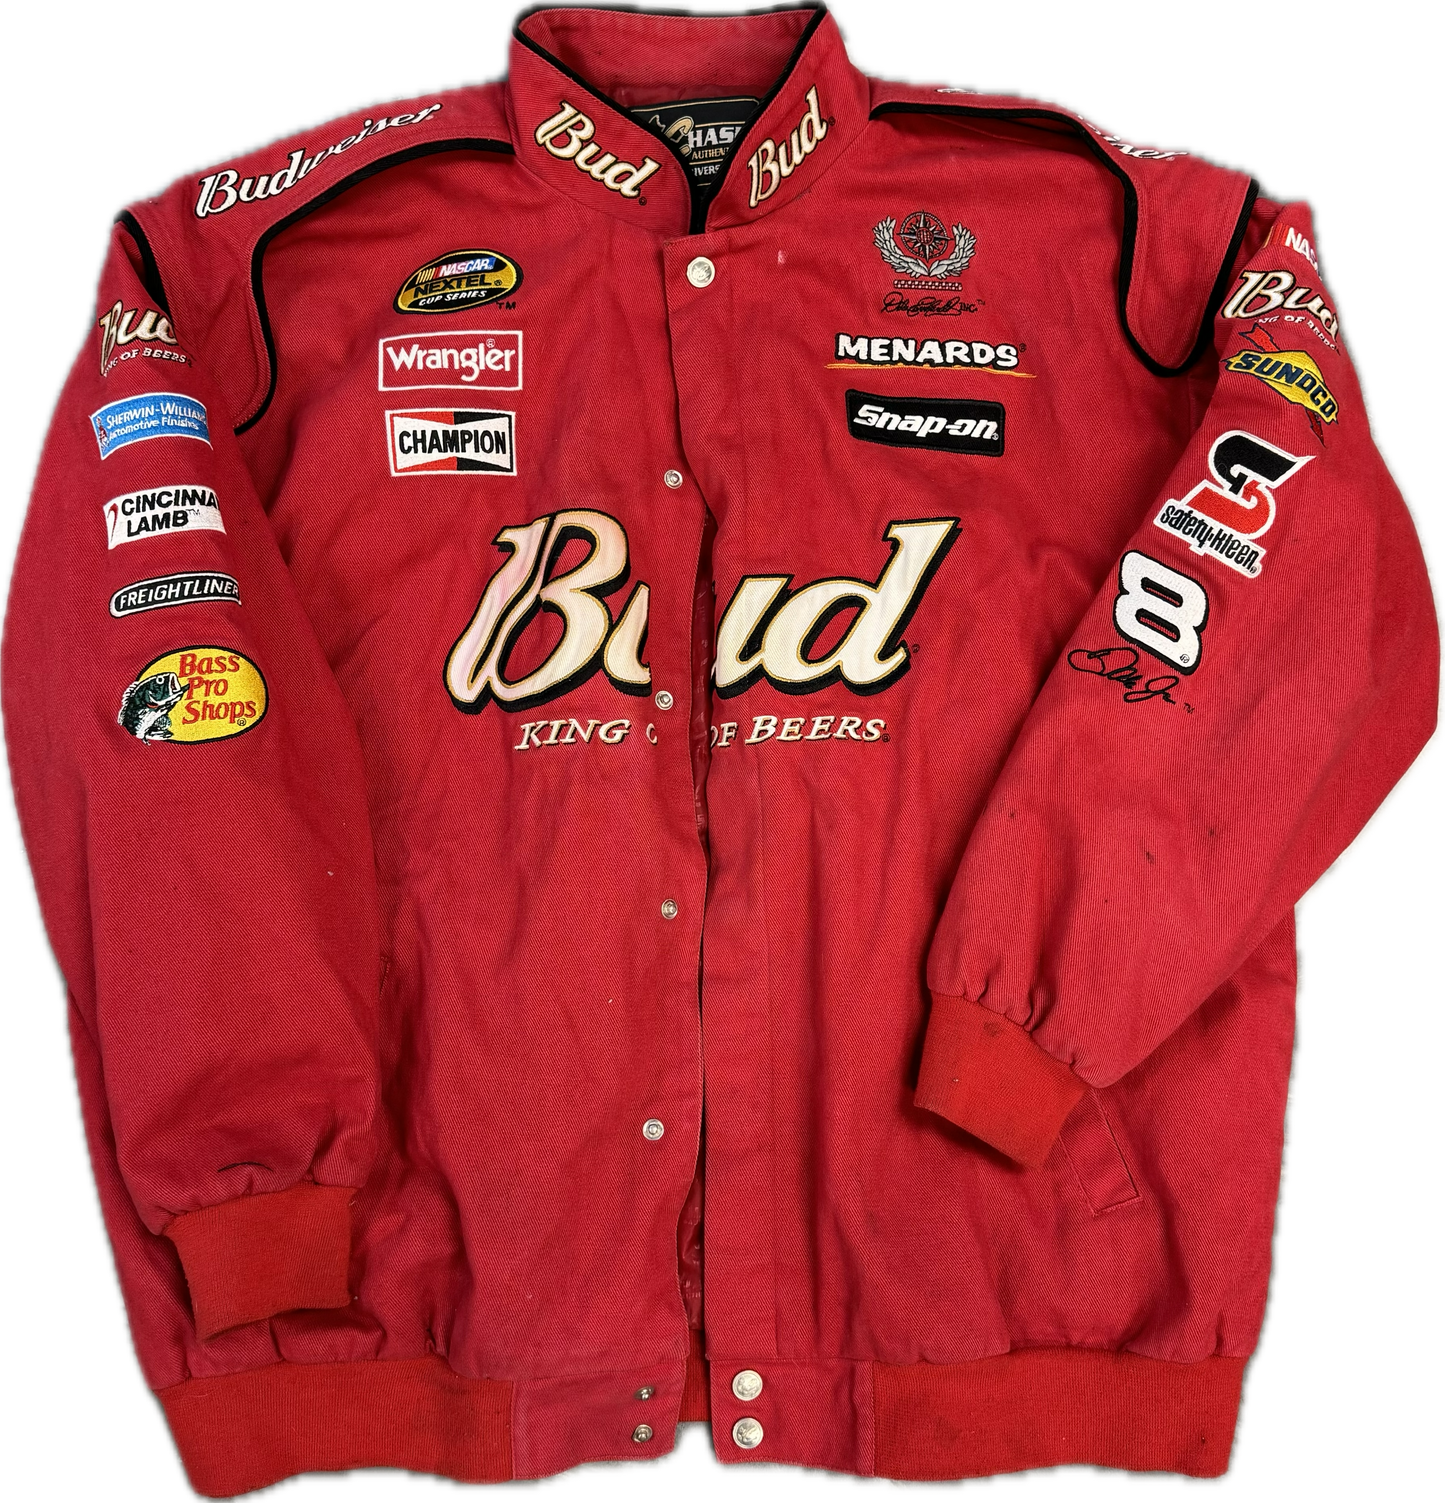 Vintage Bud Nascar Jacket